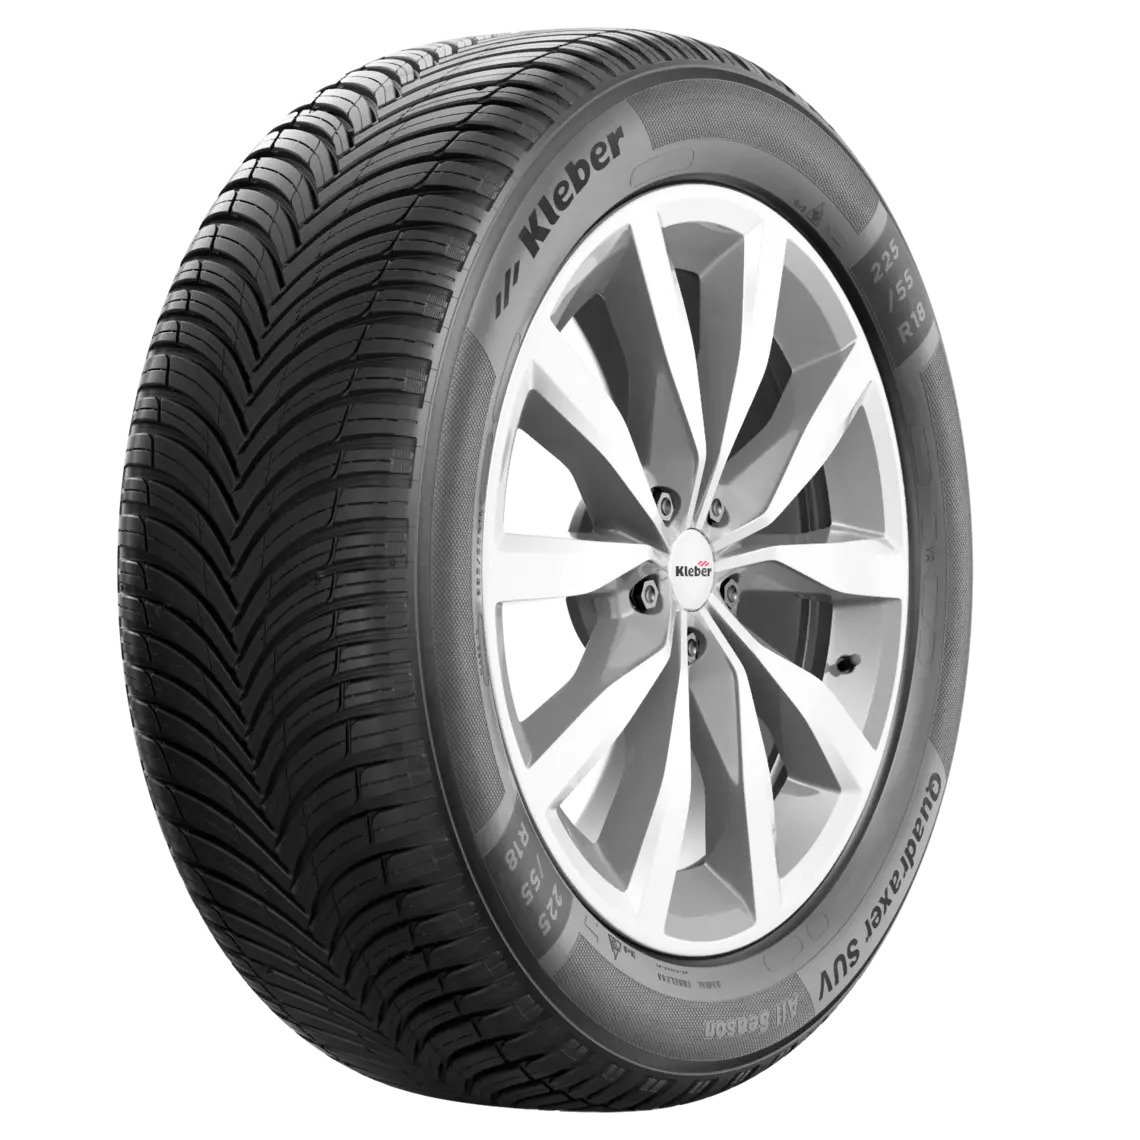 Kleber QUADRAXER 3 225/55 R16 99H XL M+S 3PMSF celoročné osobné pneumatiky